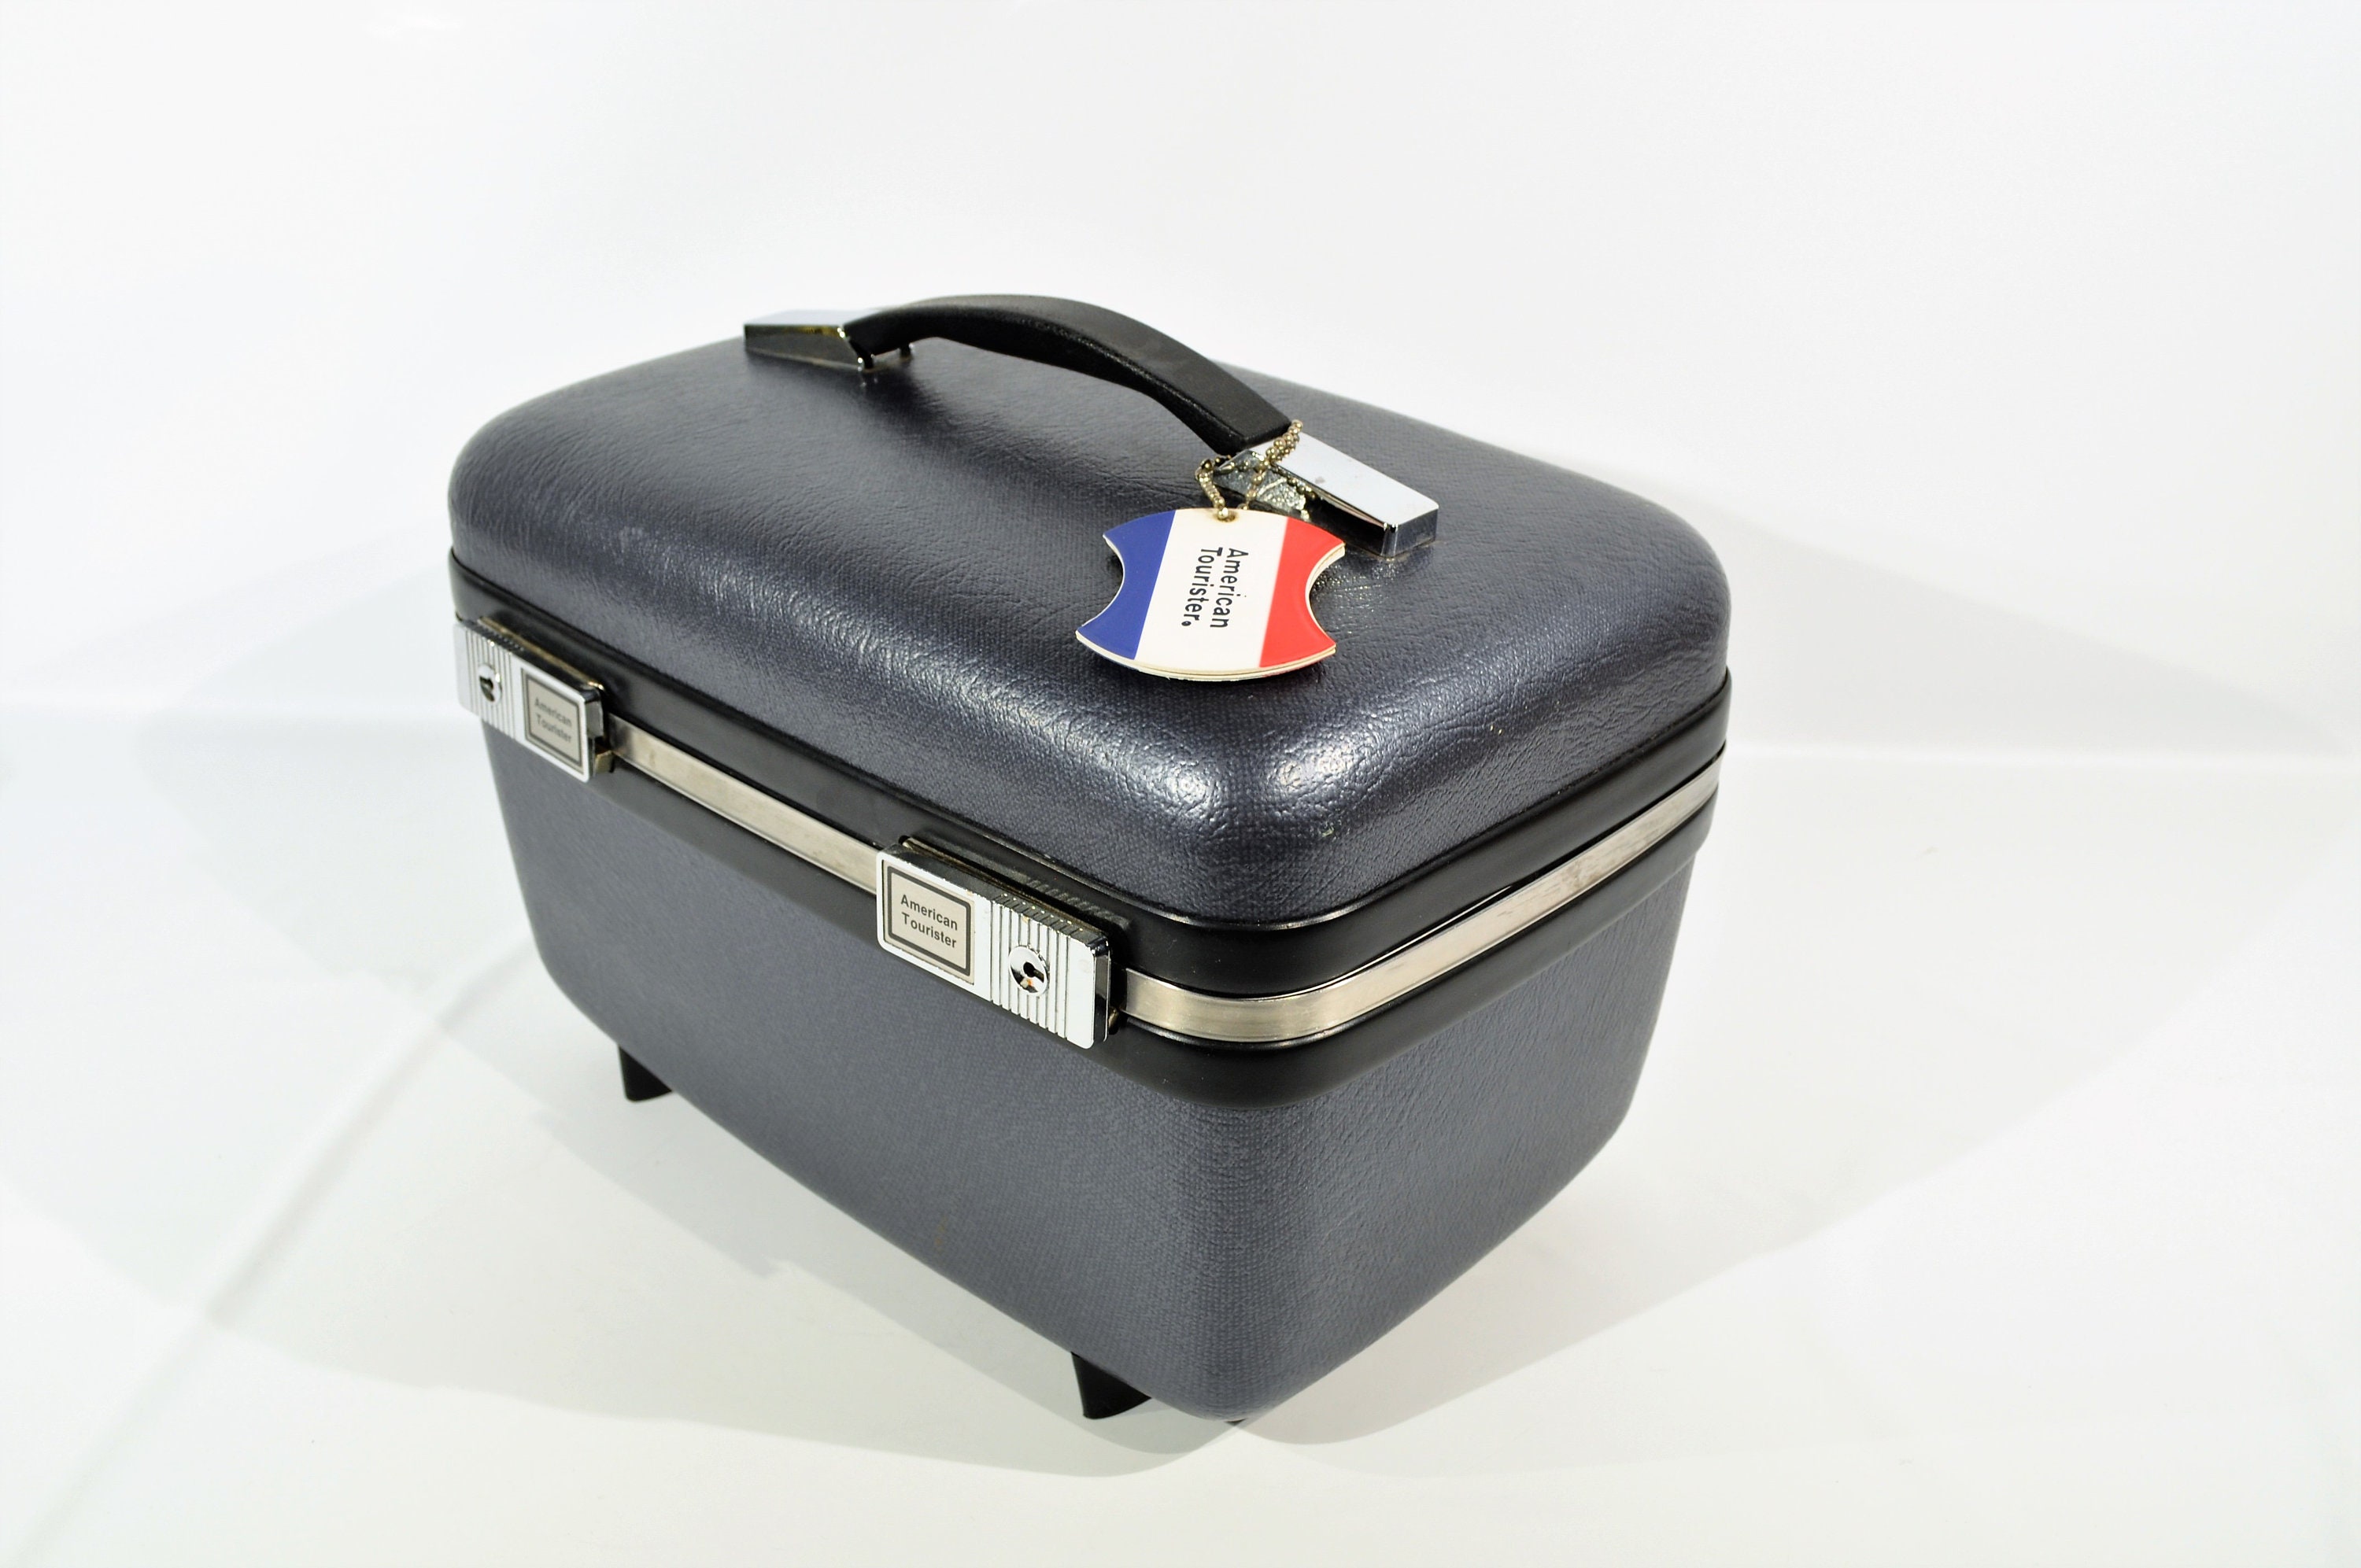 small travel casestorage case1950